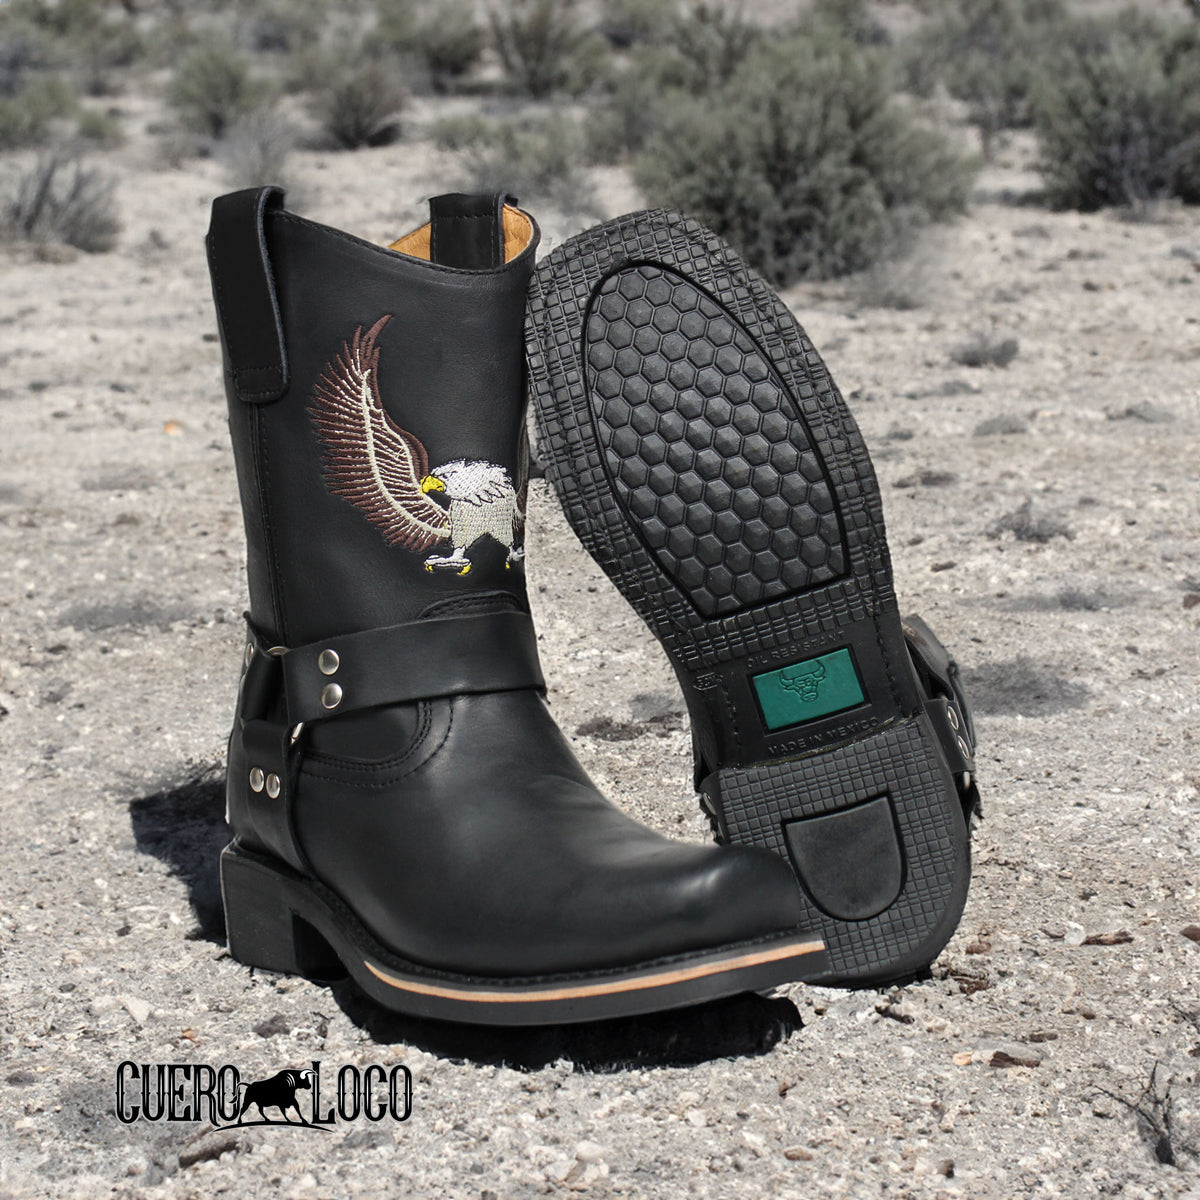 Men's Moka Genuine Leather Hand tooled Western Cowboy Boots Square Toe –  Cuero Loco